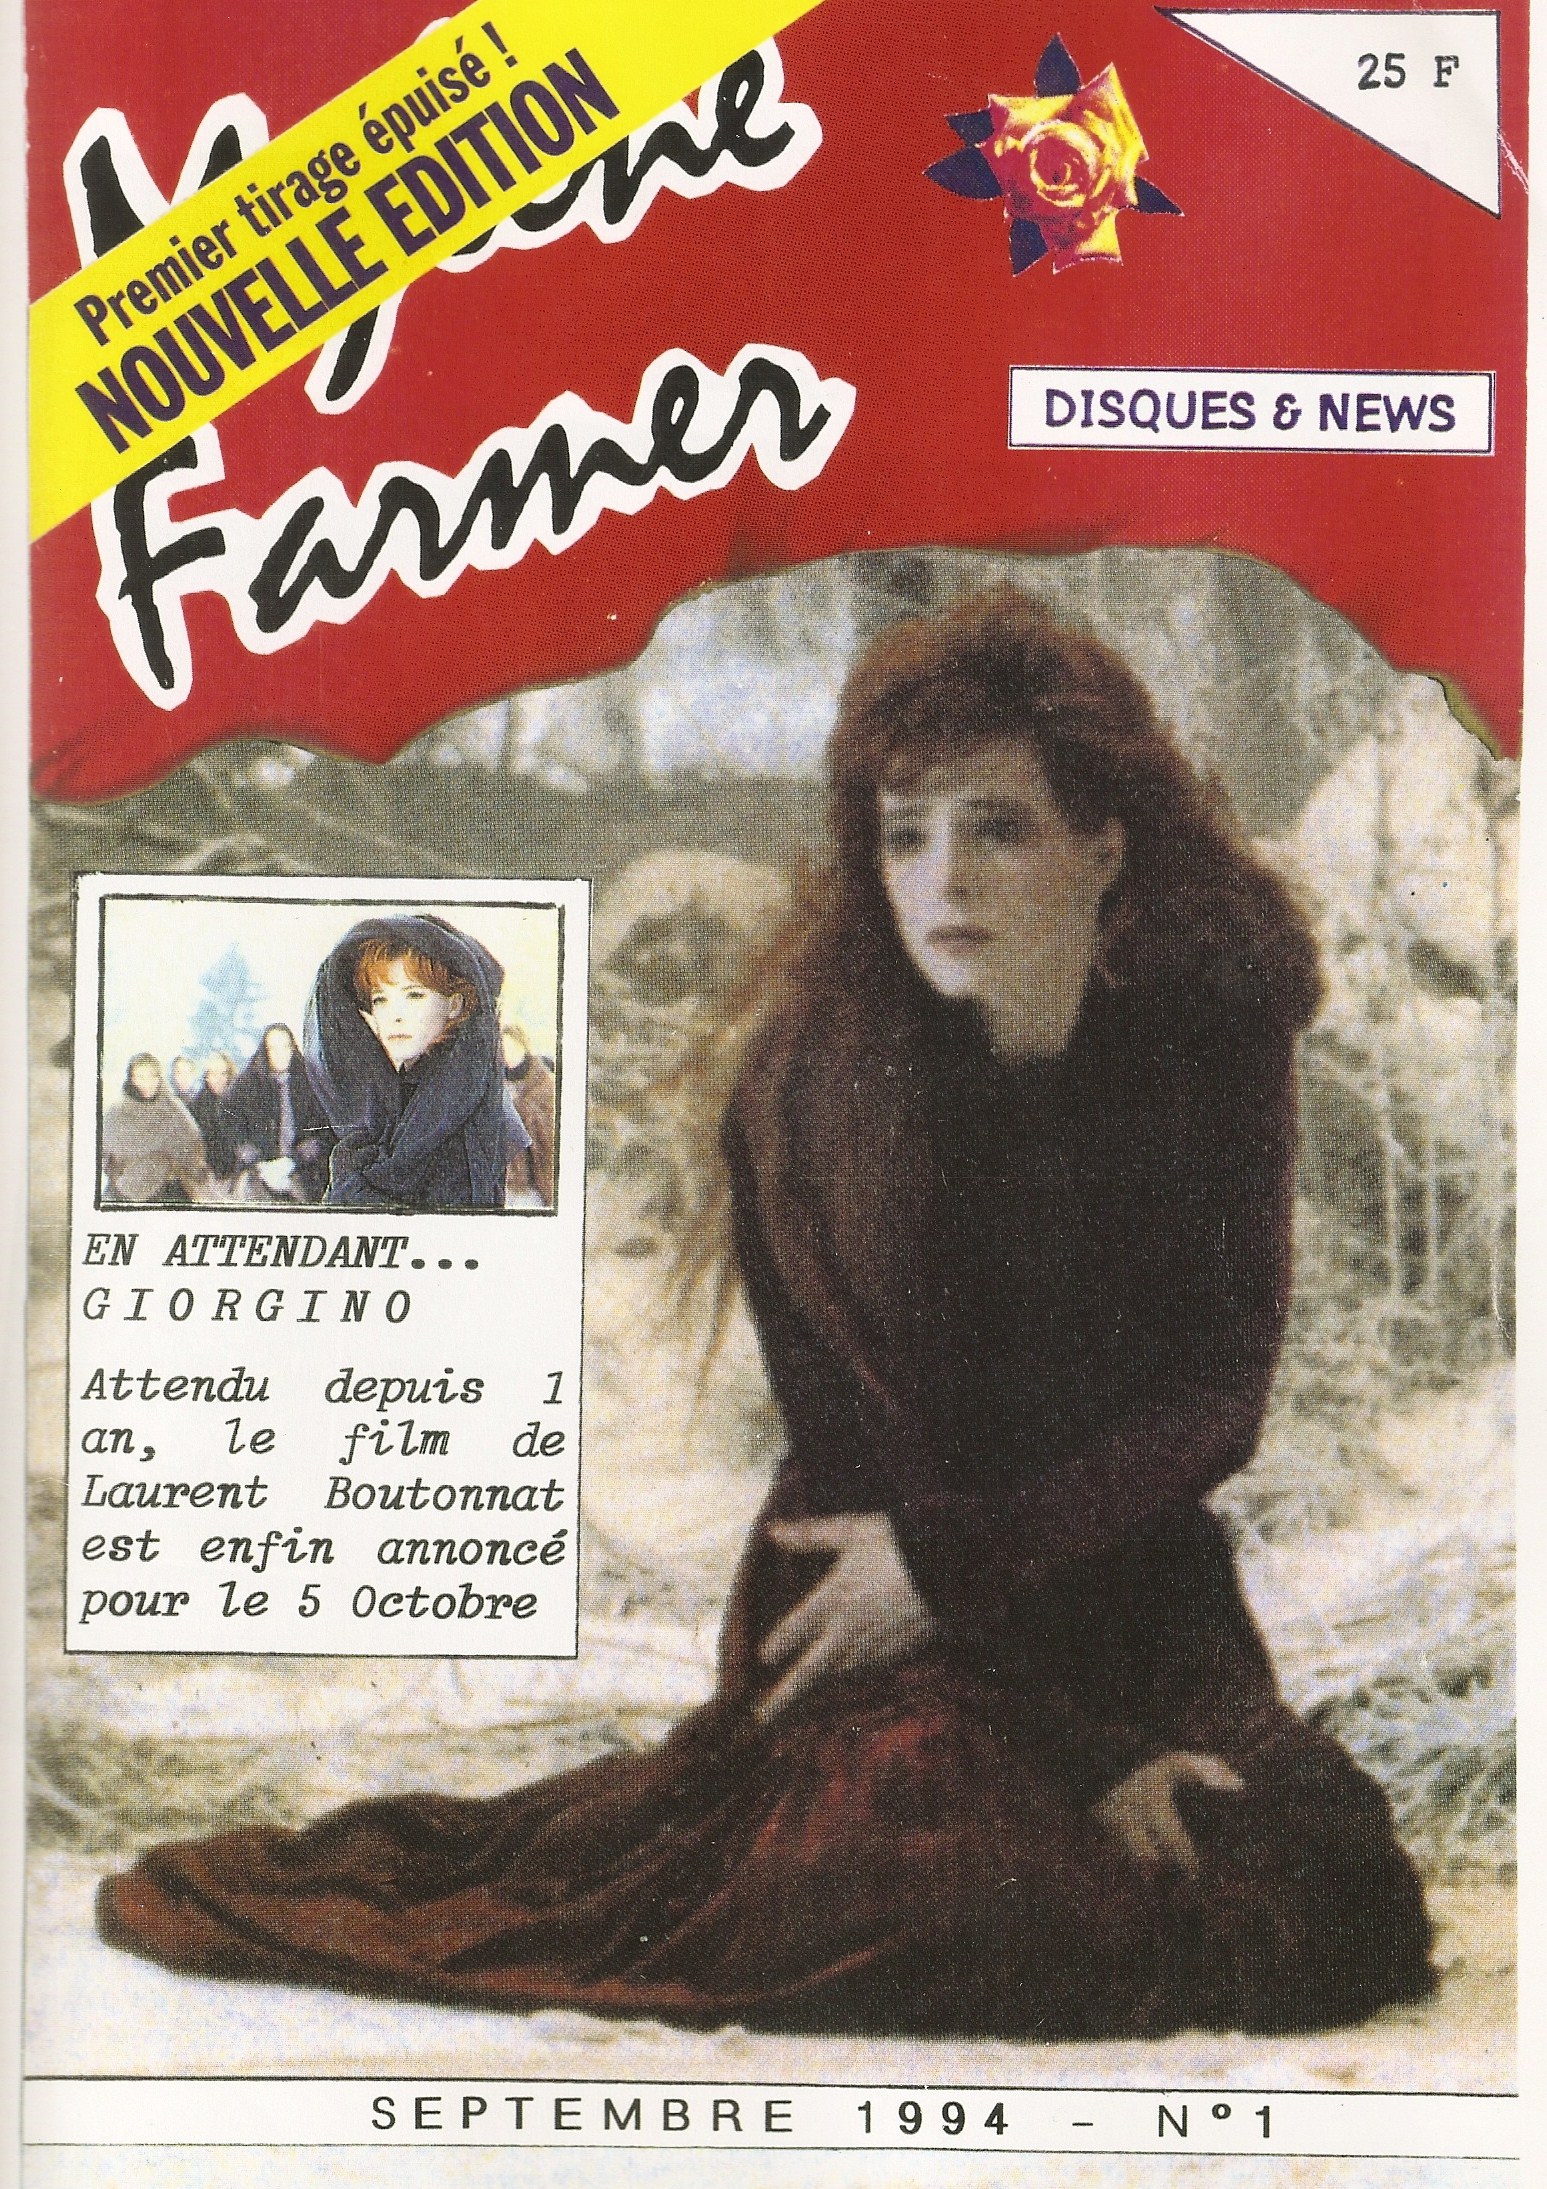 Mylène Farmer Disques & news